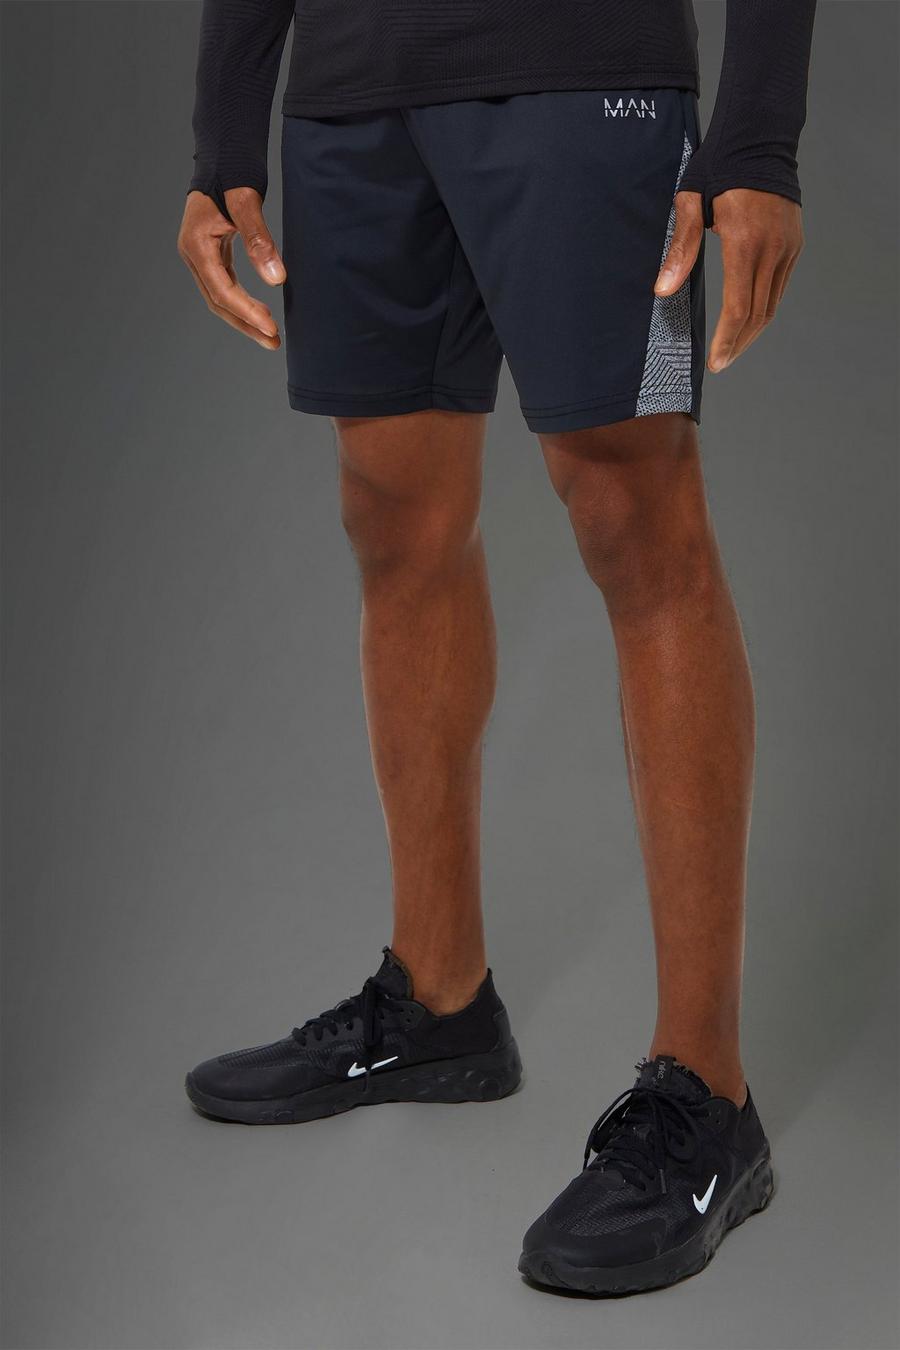 Pantaloncini Man Active Gym con pannelli in jacquard, Black negro